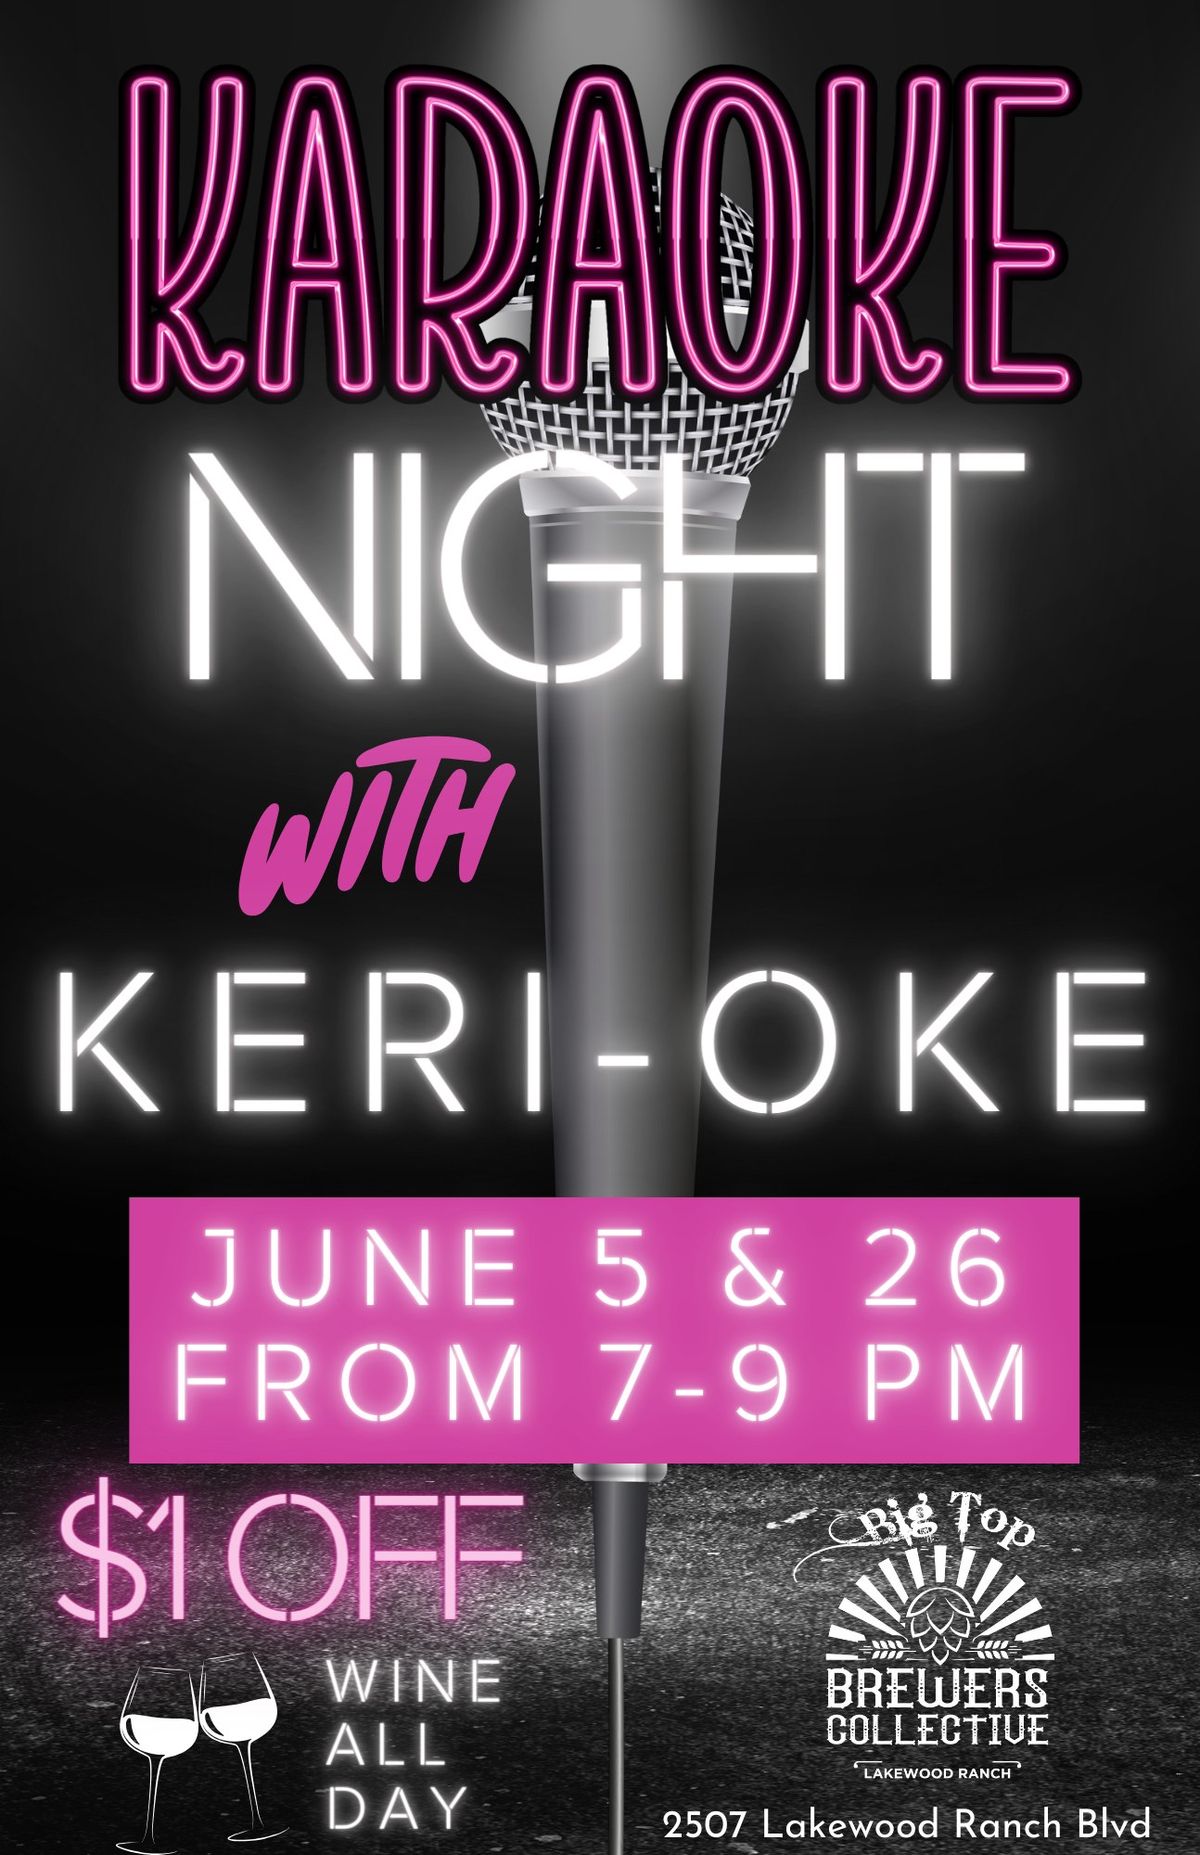 NEW!!!! Karaoke Night with Keri-oke